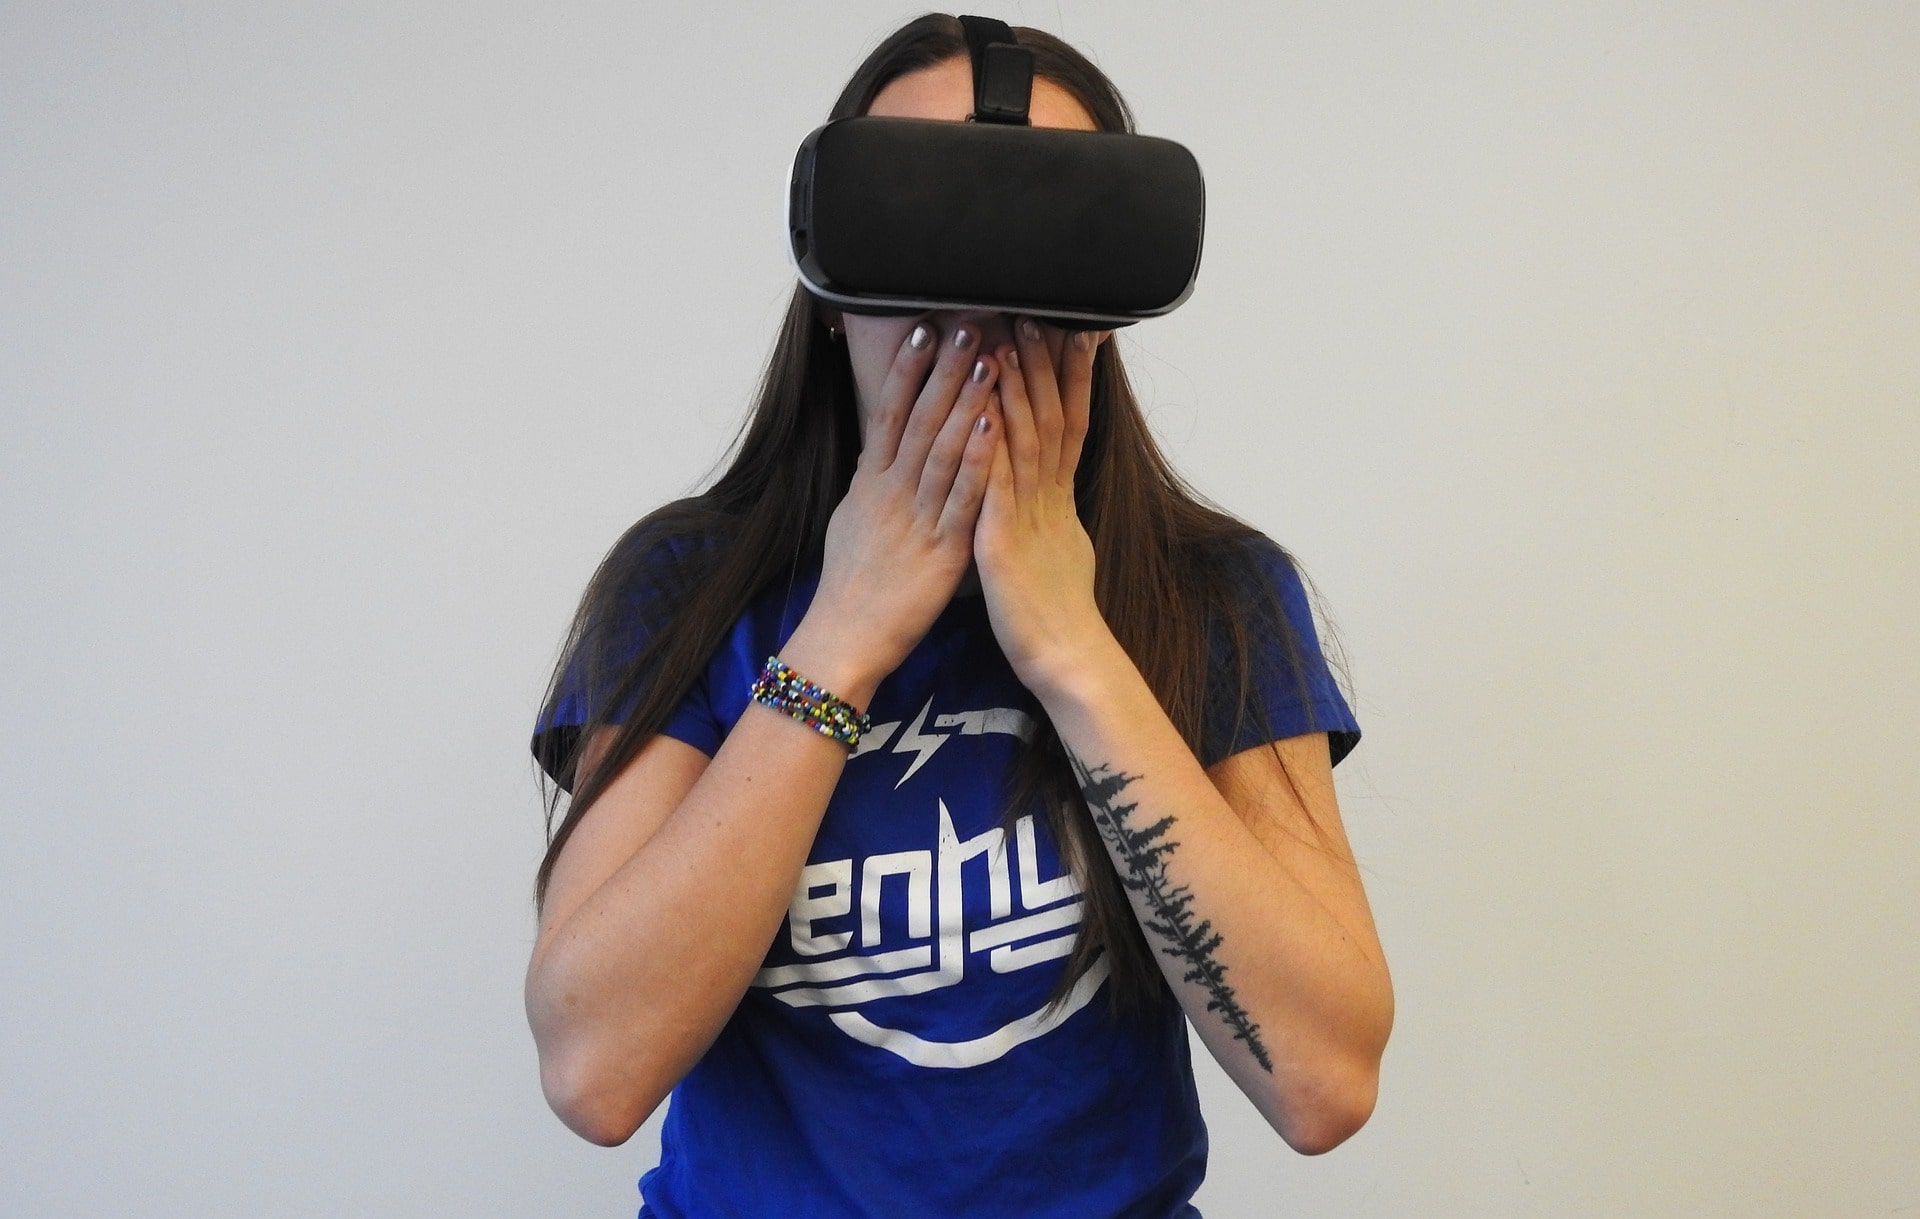 Virtual reality sponsor